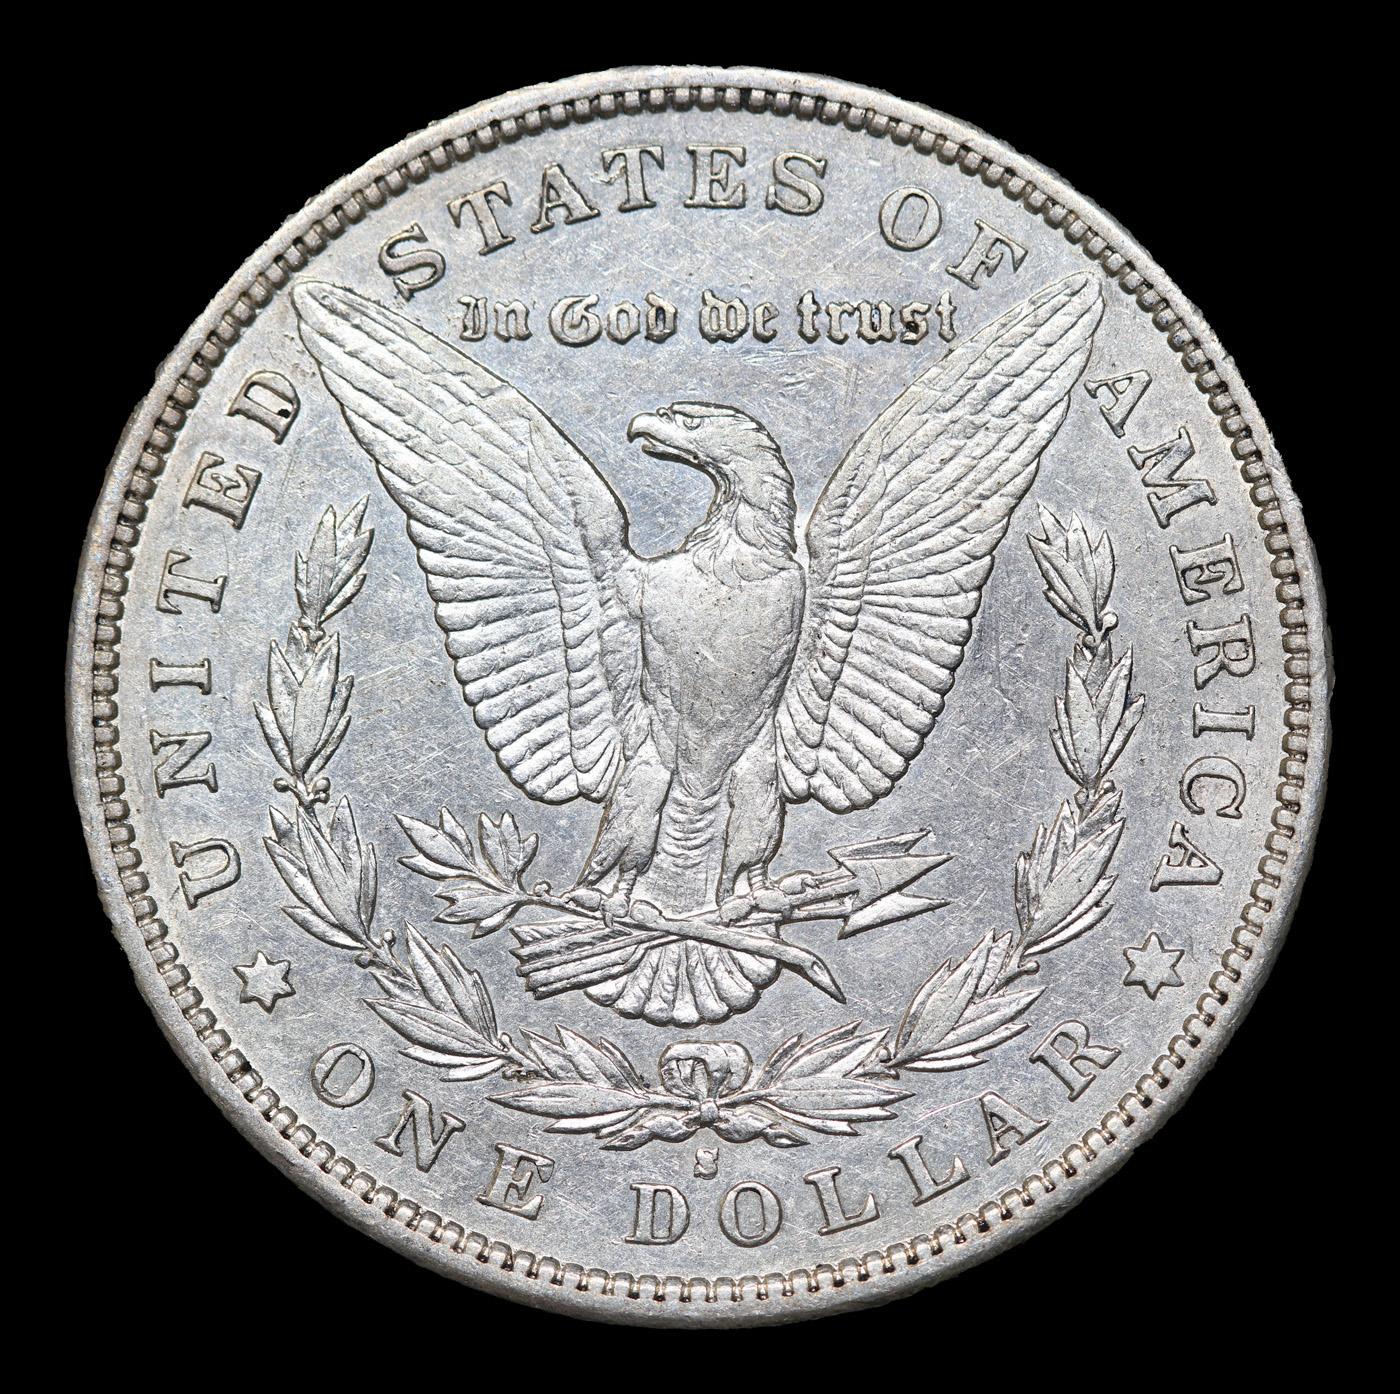 ***Auction Highlight*** 1892-s Morgan Dollar $1 Graded au58 By SEGS (fc)